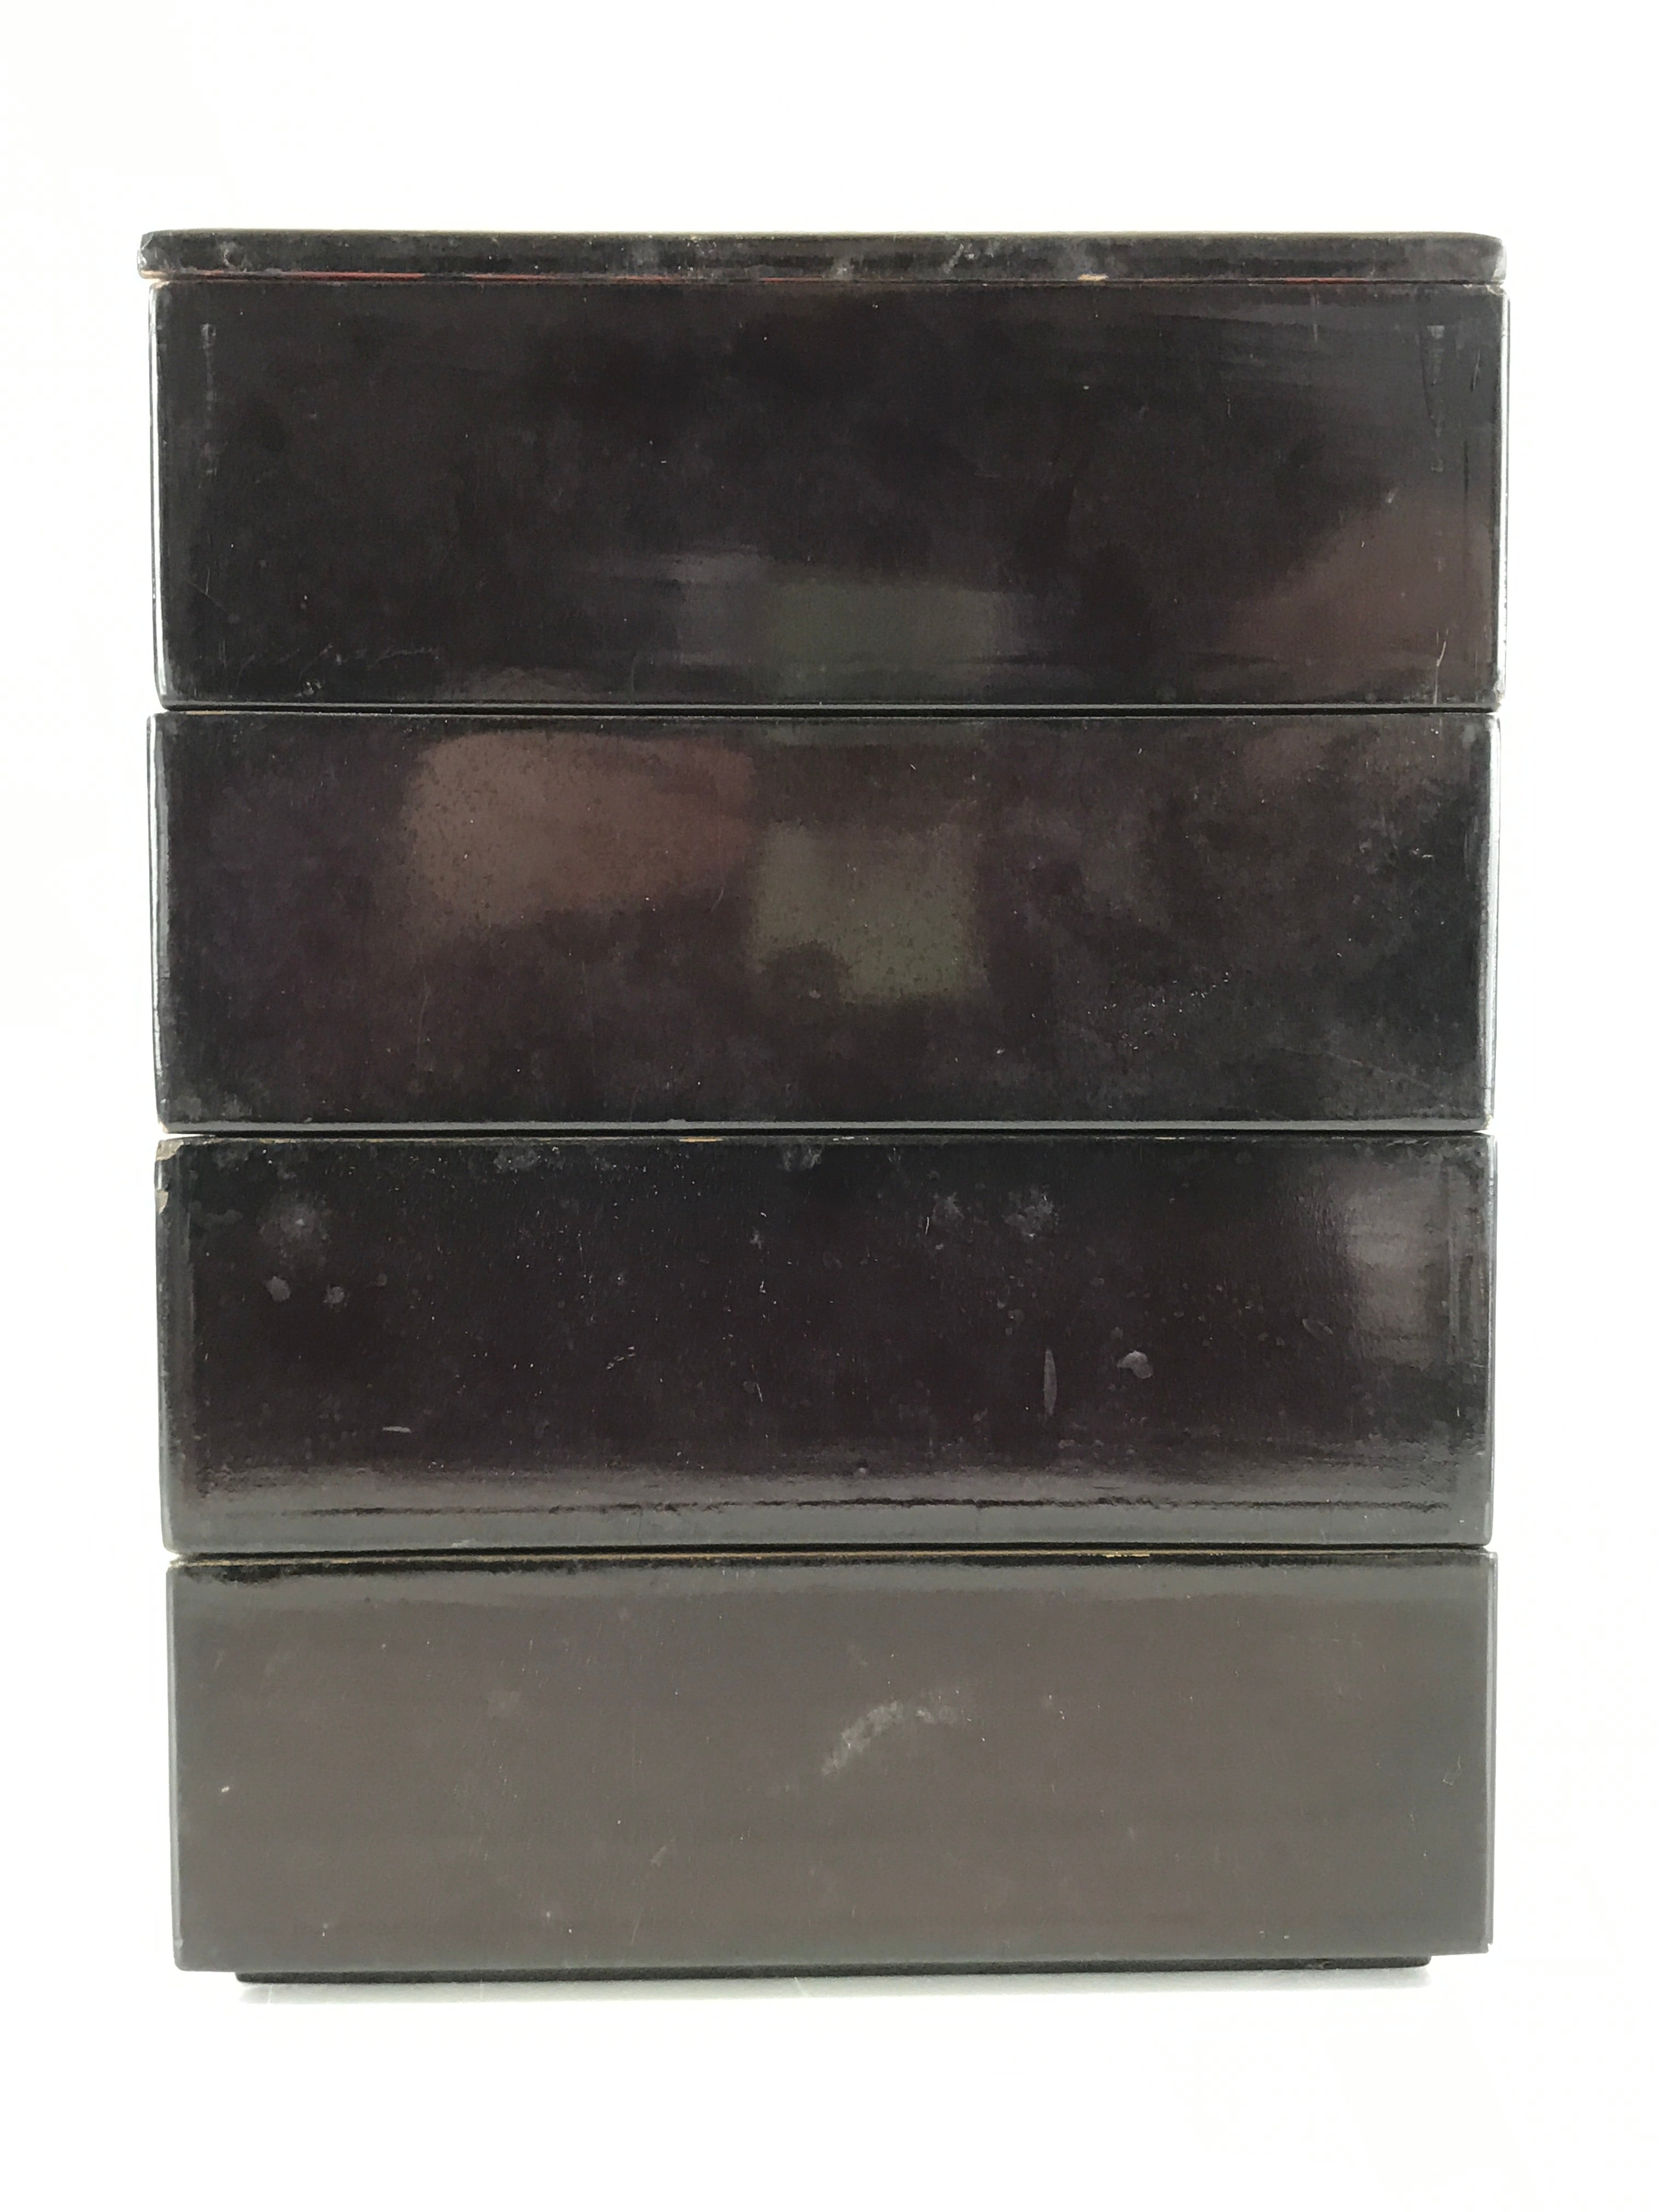 Japanese Lacquerware Wooden Bento Box 4 Tier Vtg Black Lidded Box Jubako JB81